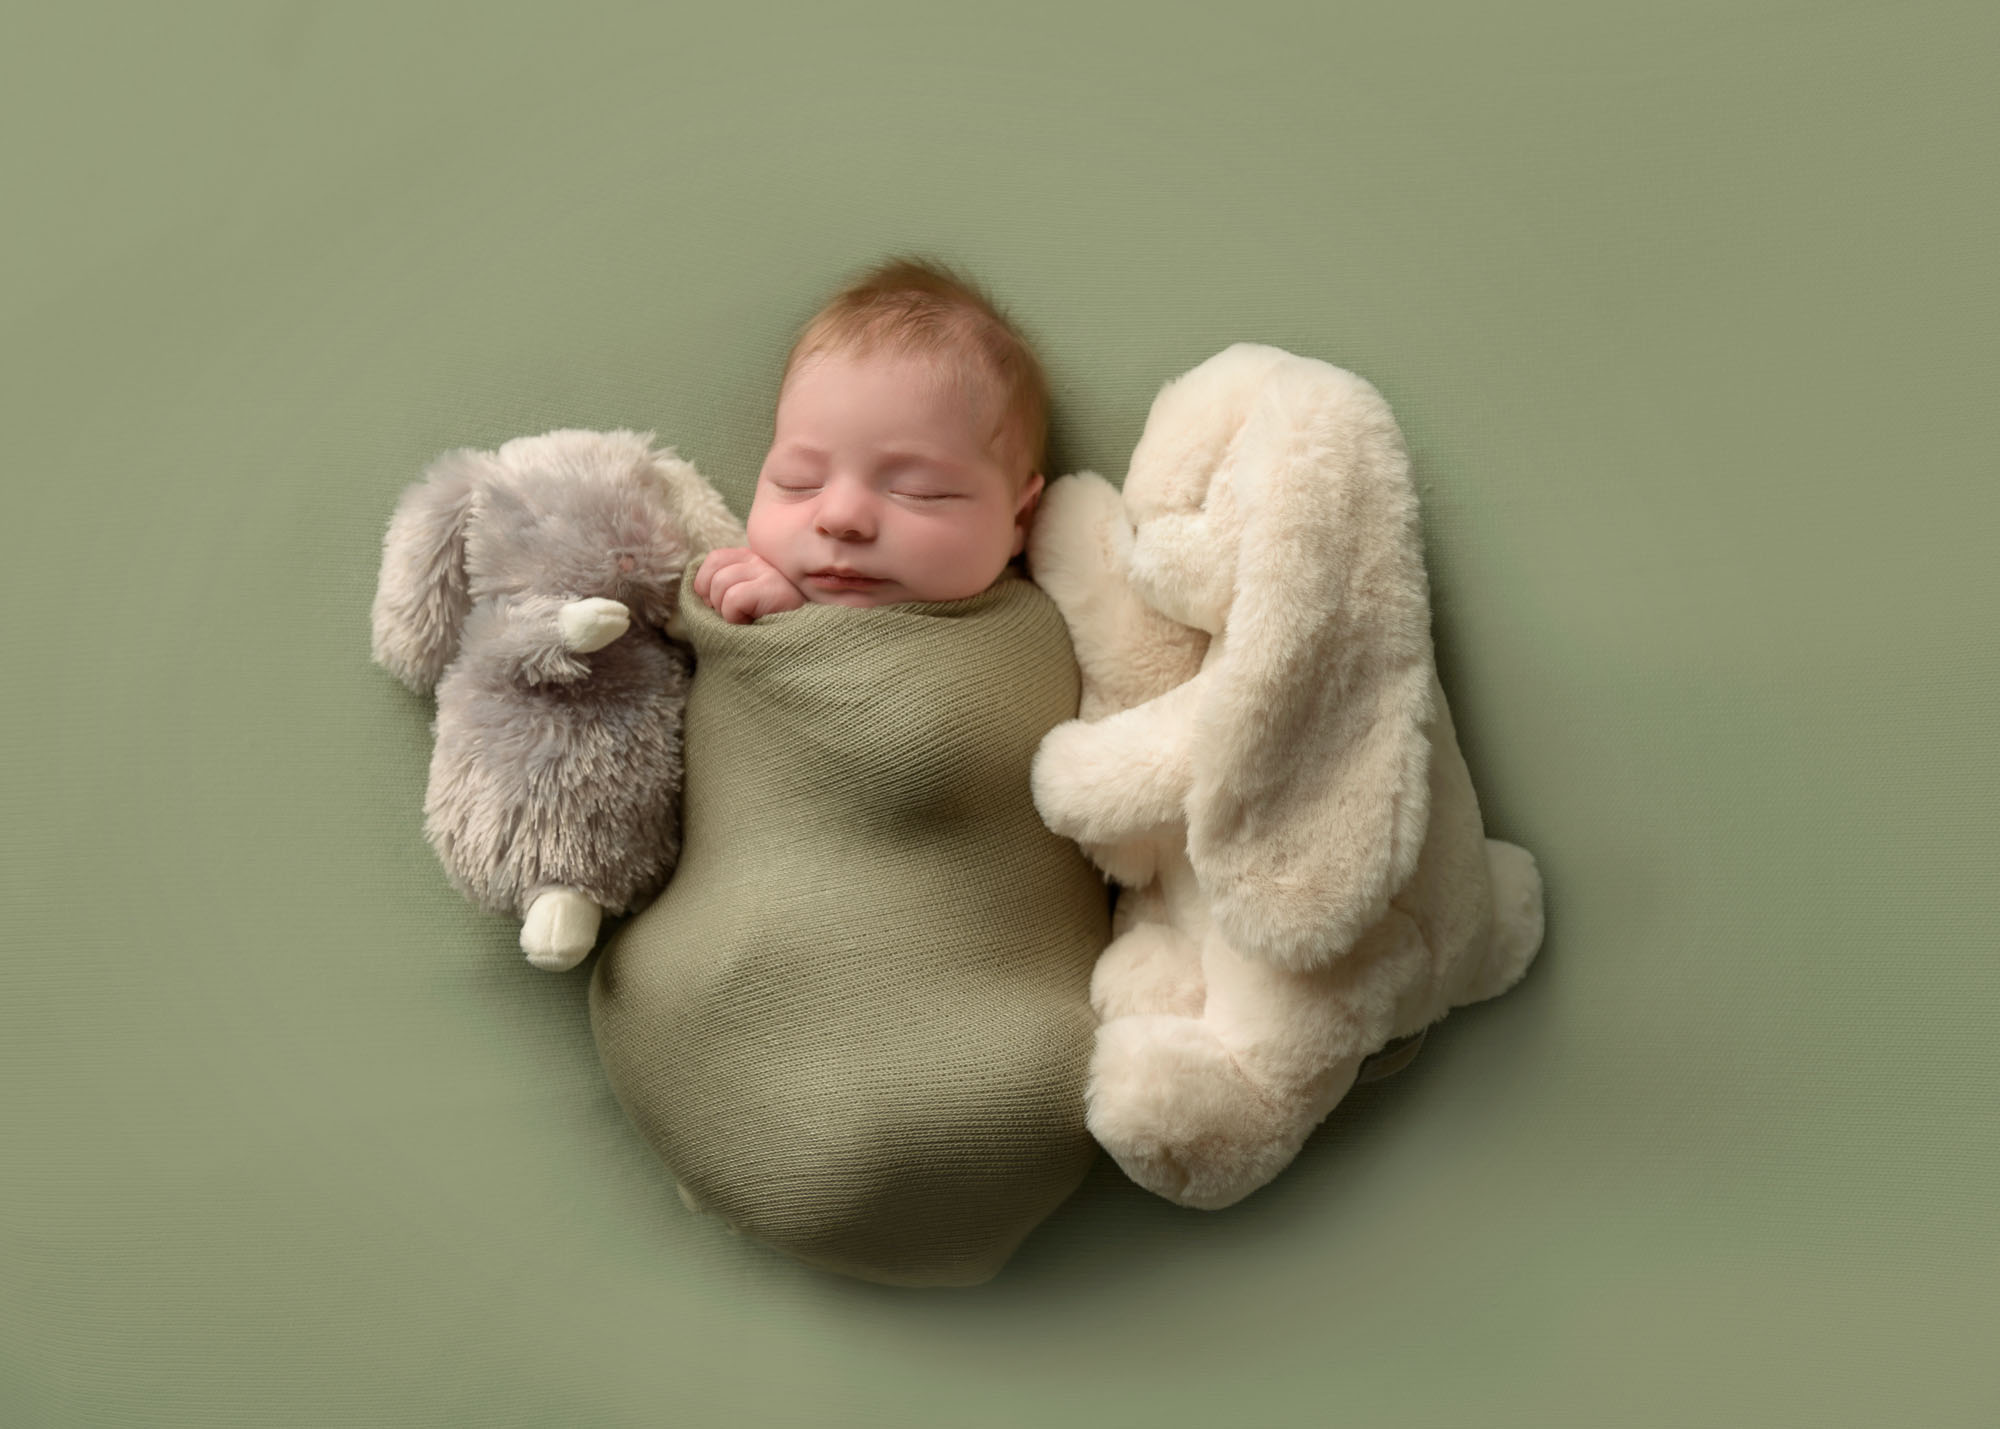 Newborn photo with stuffed animals.